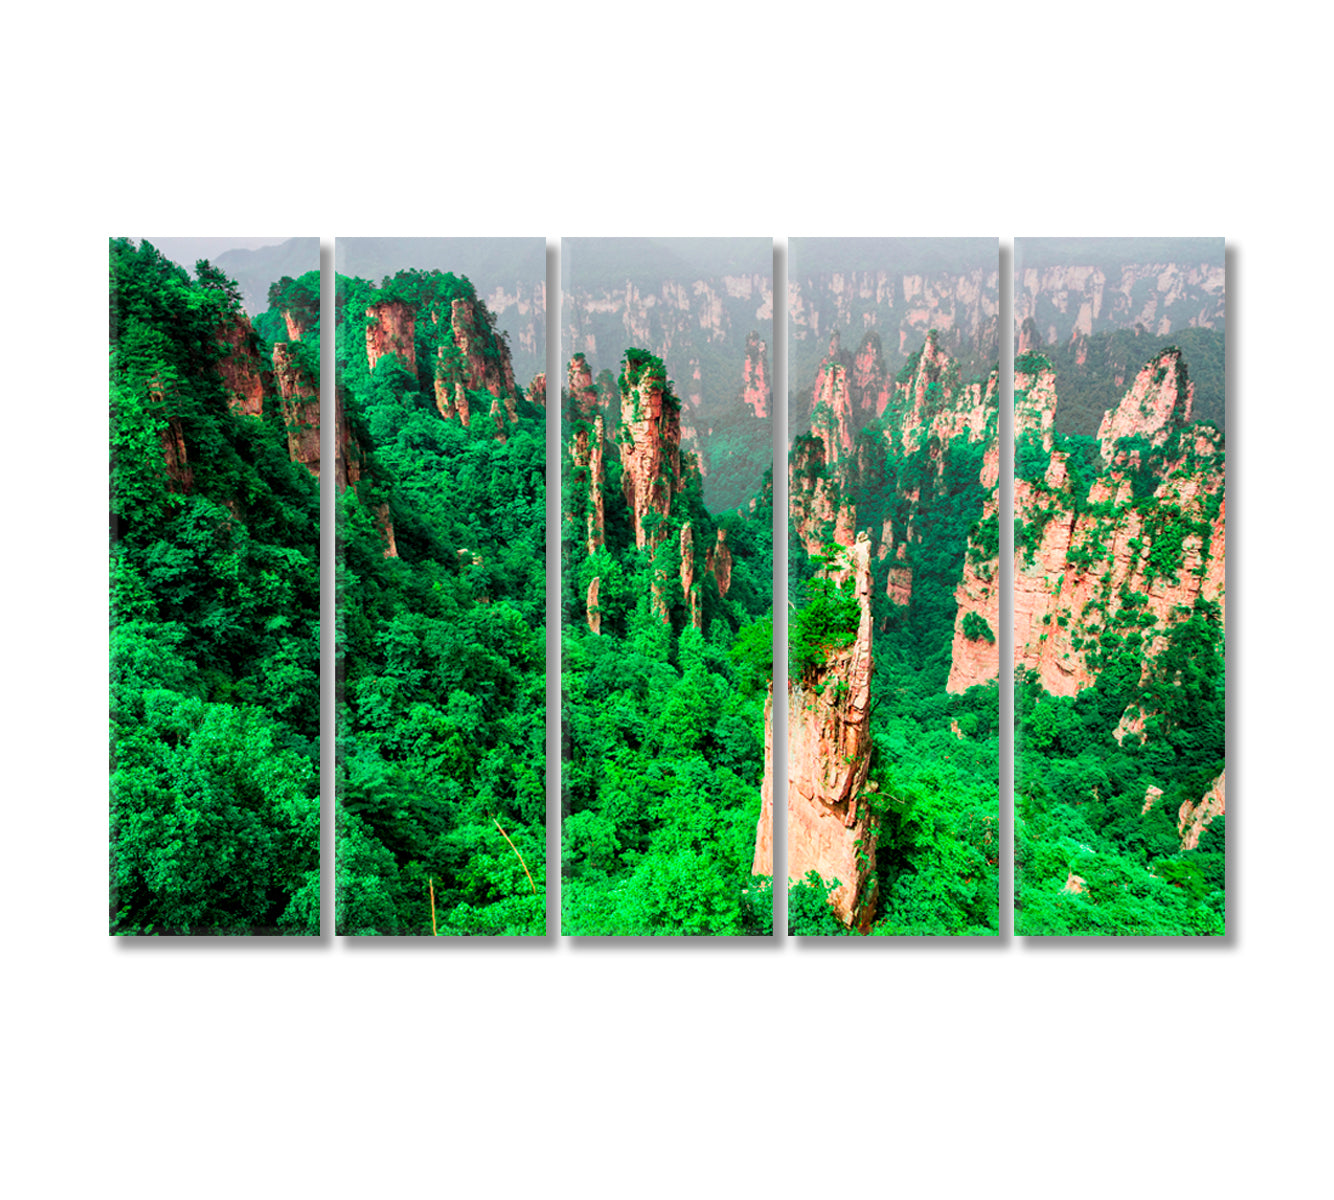 Tianzi Mountain Column Zhangjiajie National Forest Park China Canvas Print-Canvas Print-CetArt-5 Panels-36x24 inches-CetArt